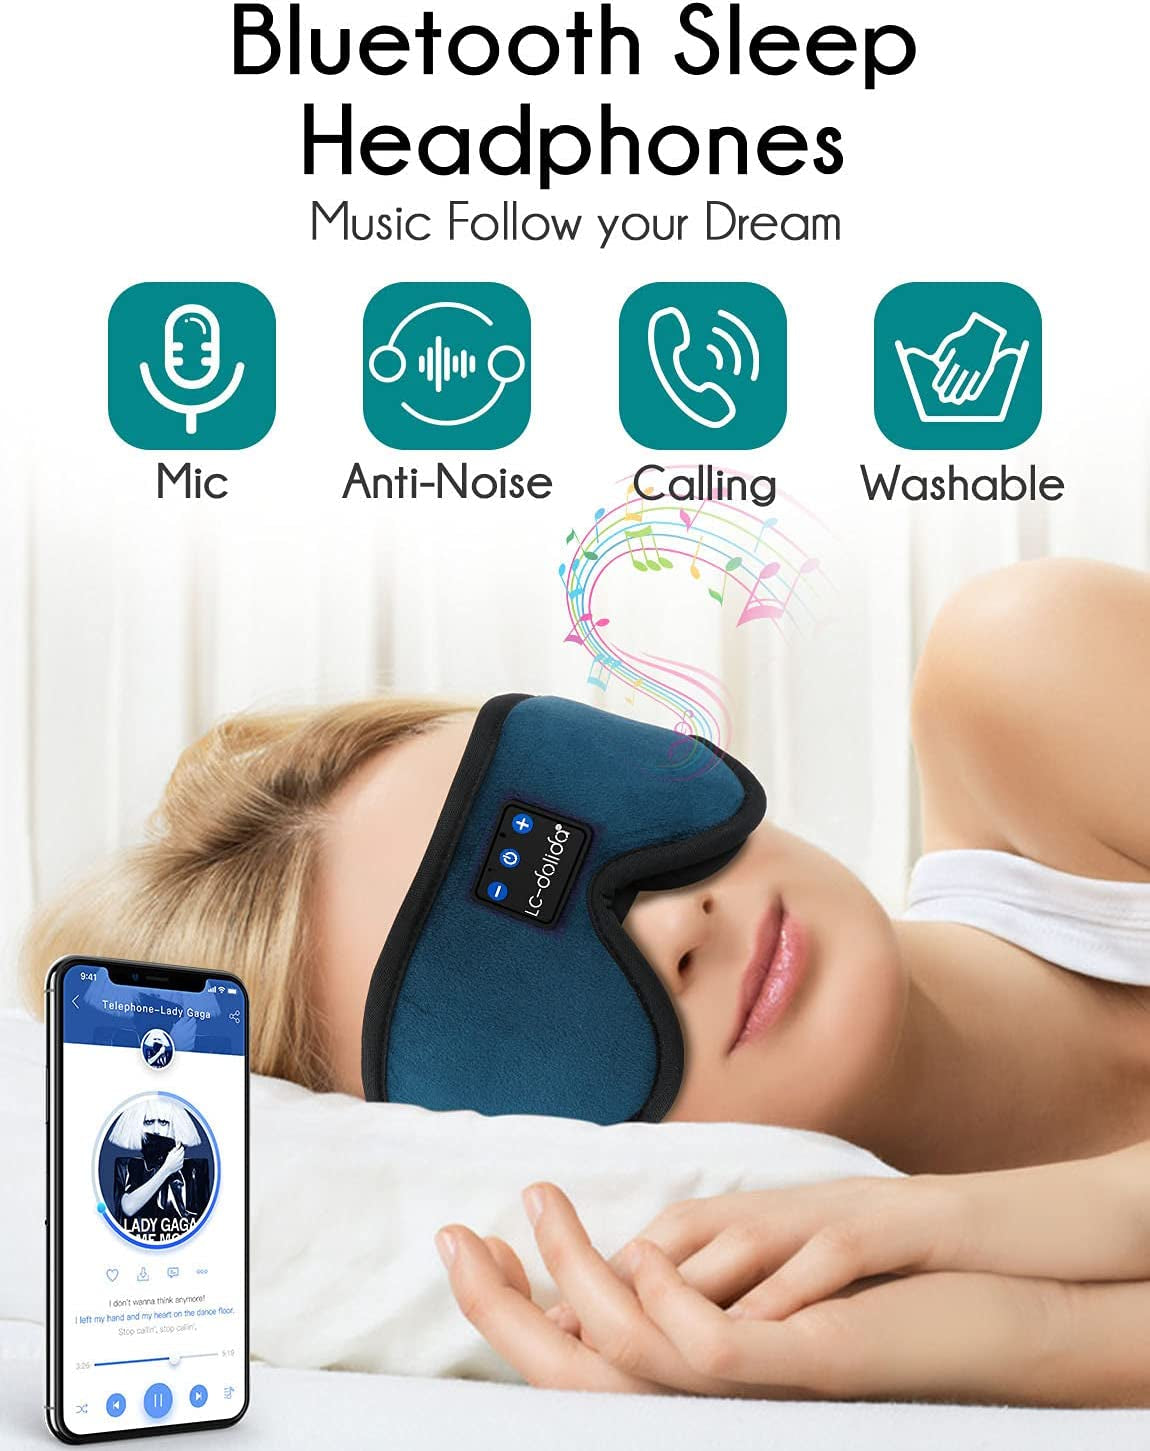 Lc-Dolida Sleeping Headphones Eye Mask, Sleep Mask with Bluetooth Headphones 3D Eye Mask Wireless Music Cotton Sleep Cover for Side Sleepers Nap Insomnia Air Travel Meditation Gifts for Unisex